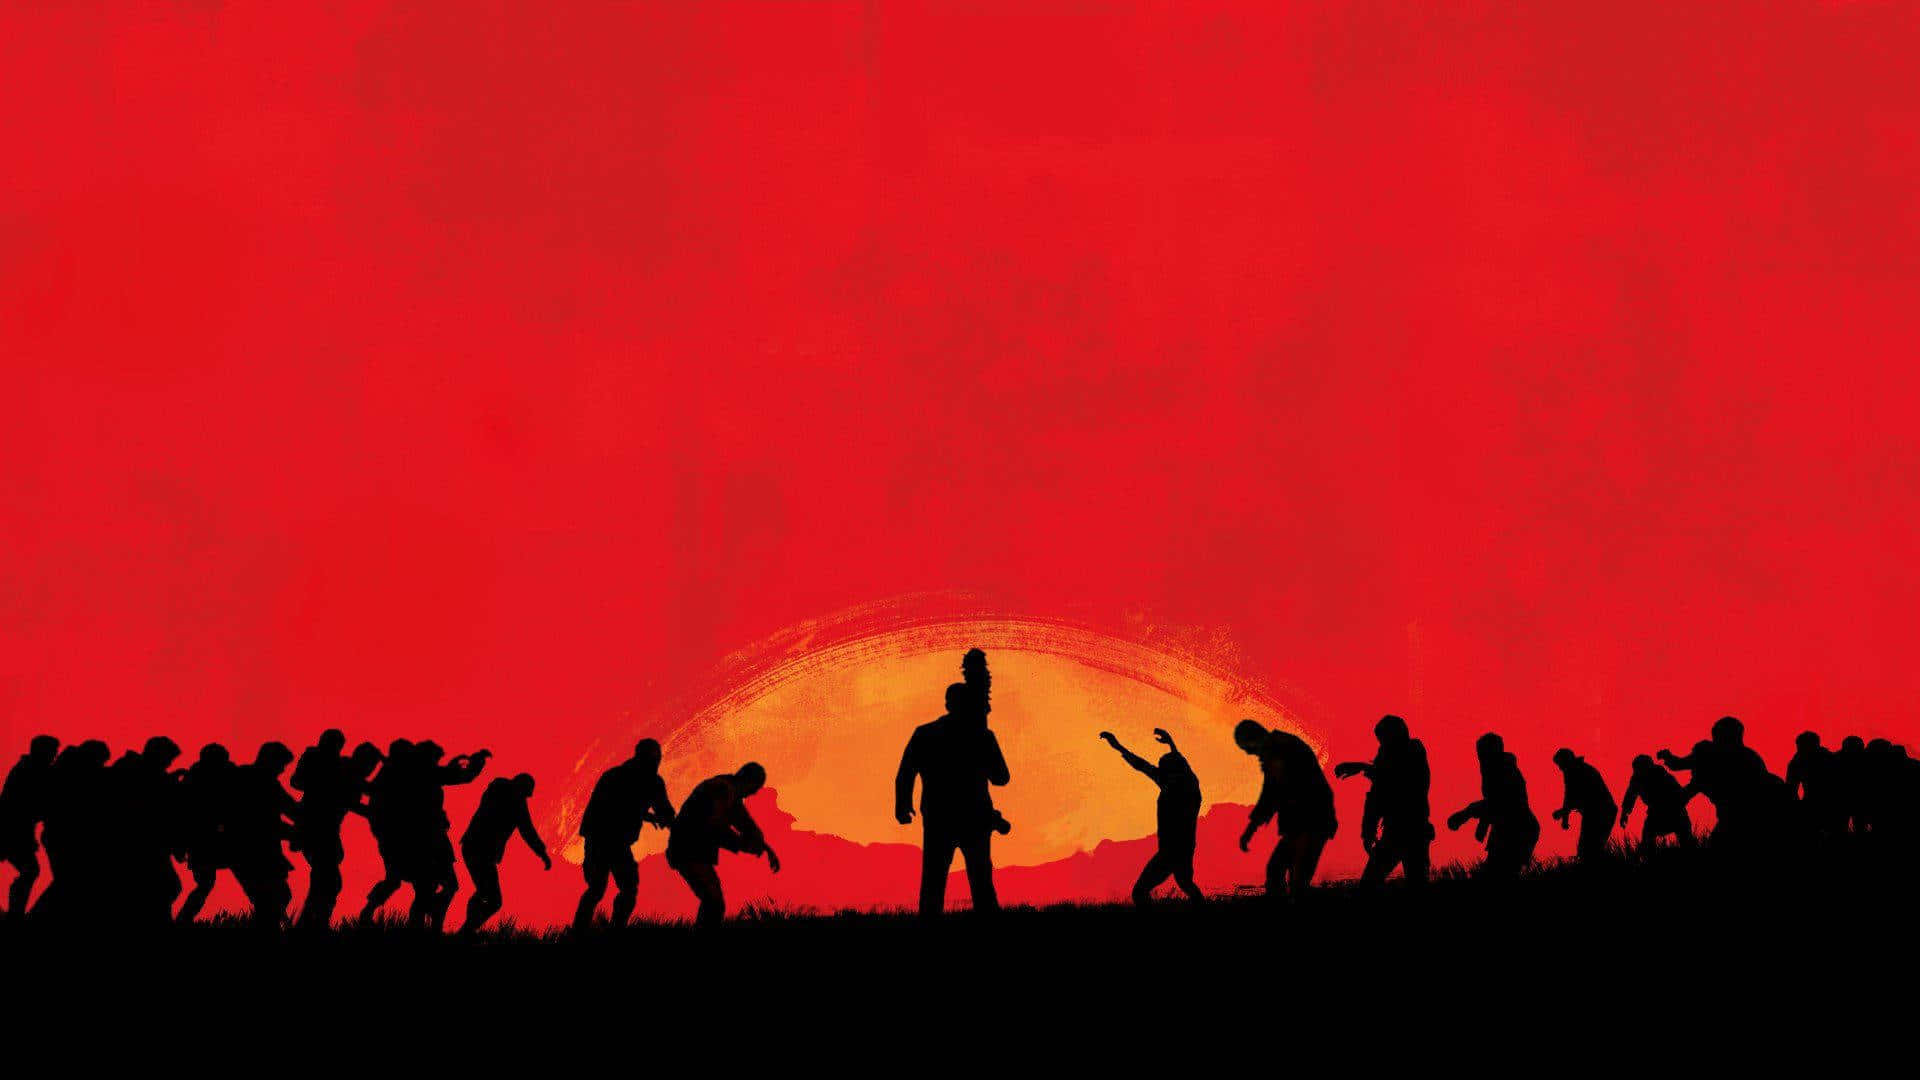 Red Dead Redemption 2 Hd Wallpaper